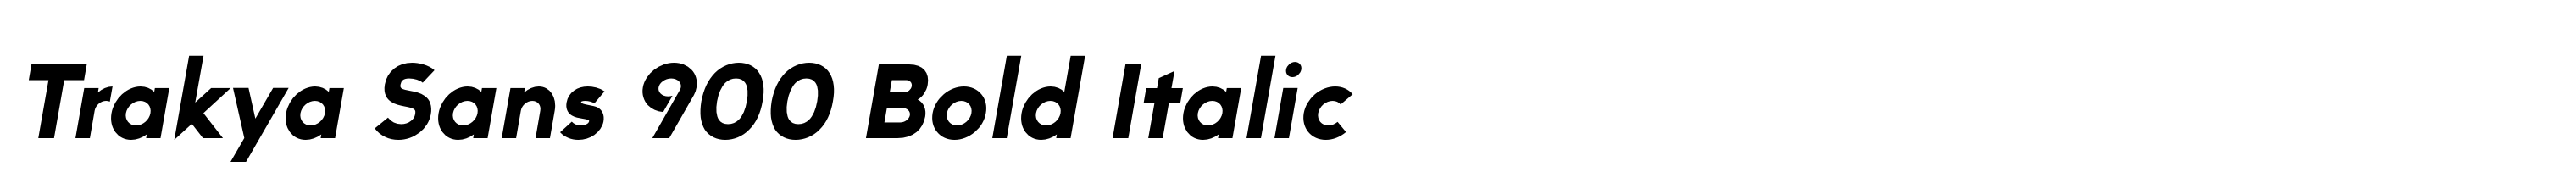 Trakya Sans 900 Bold Italic